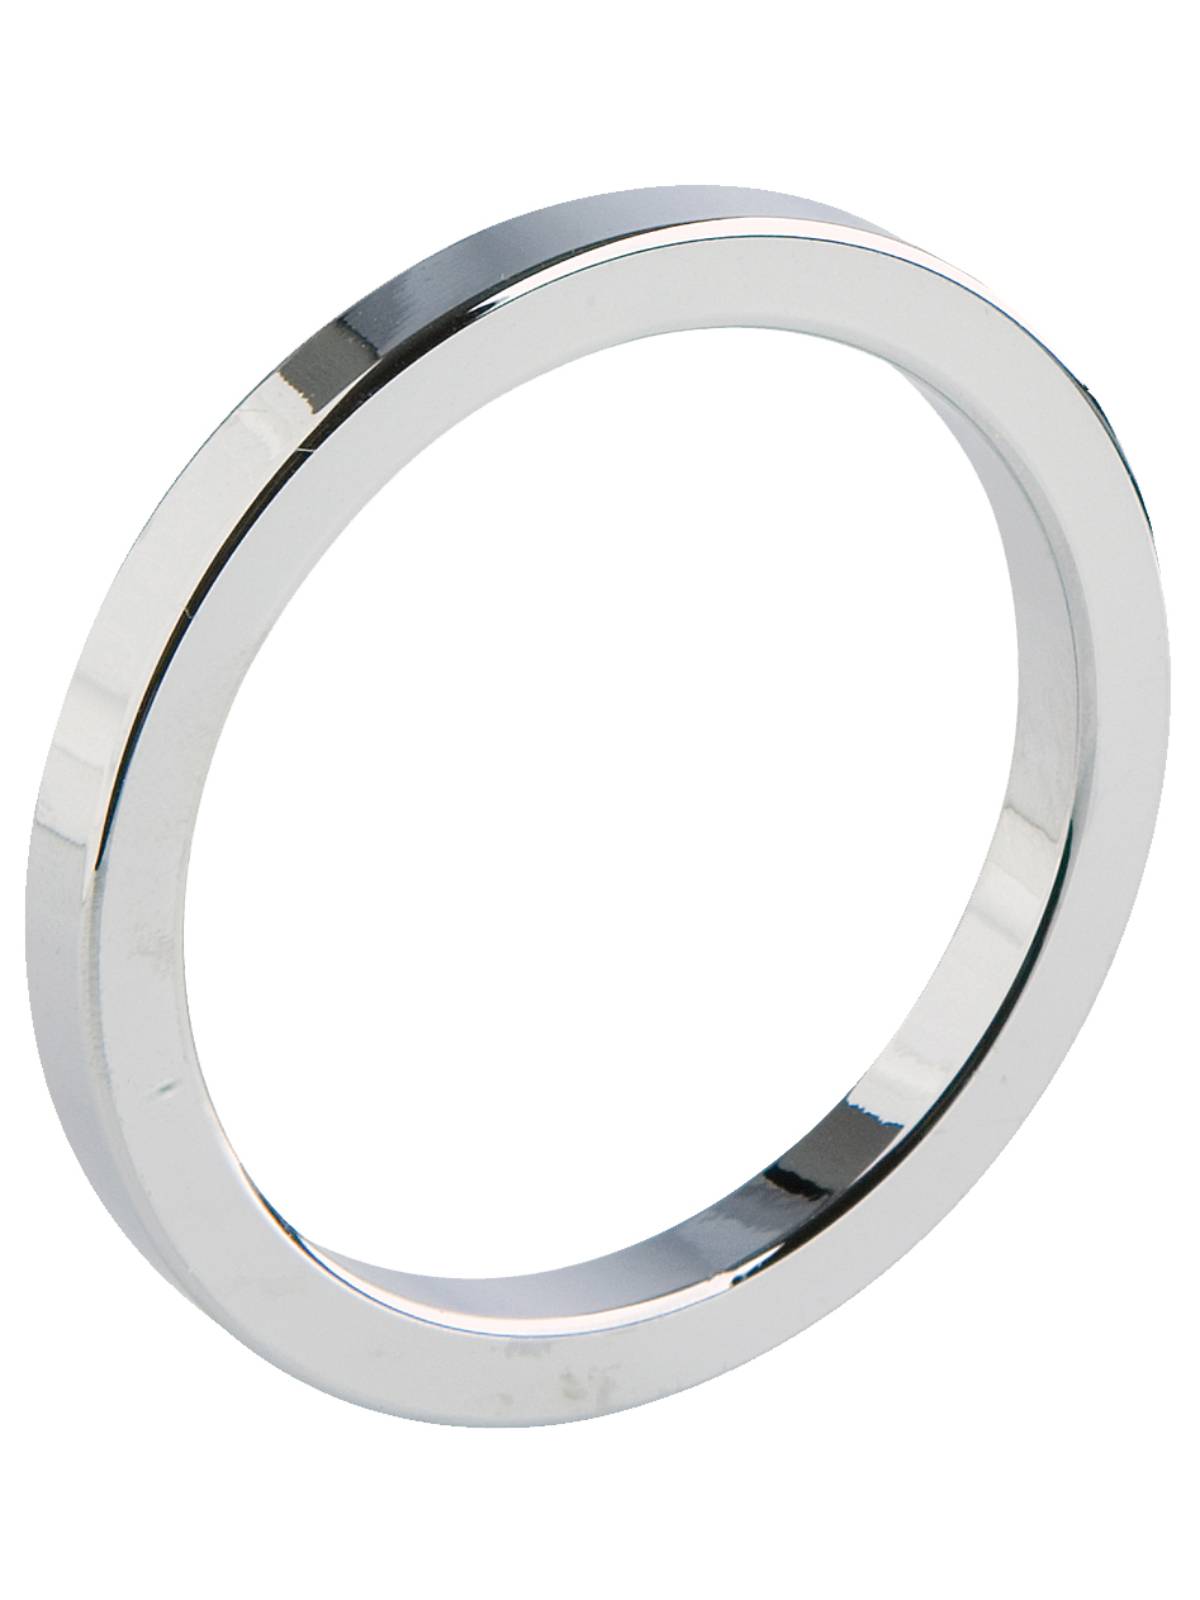 Metal Ring Starter Steel | Ø 40 mm